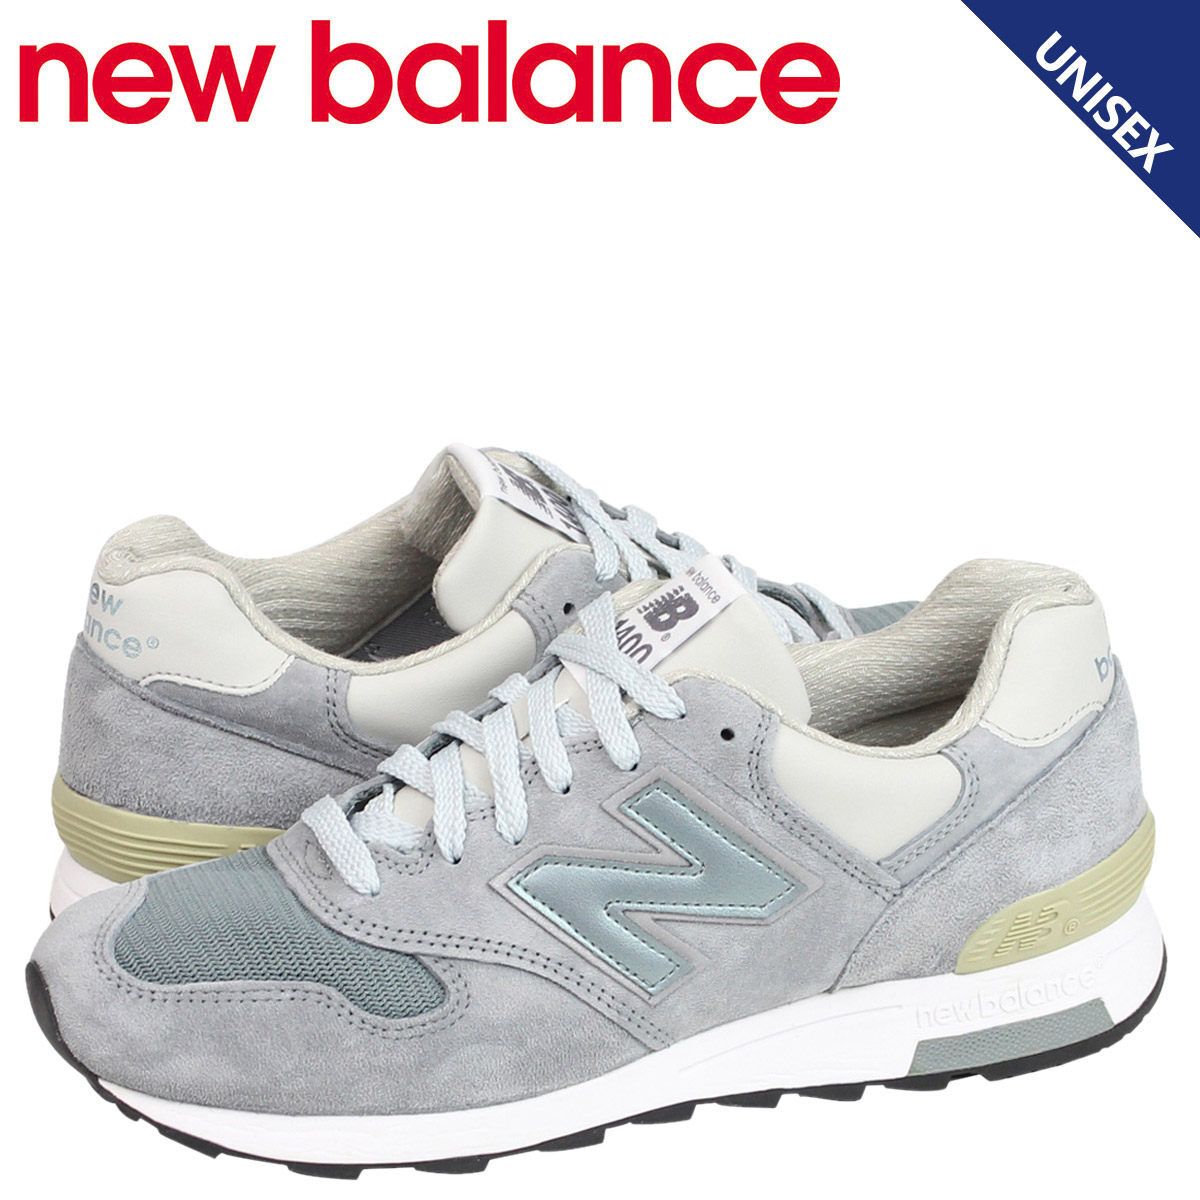 new balance 998 online